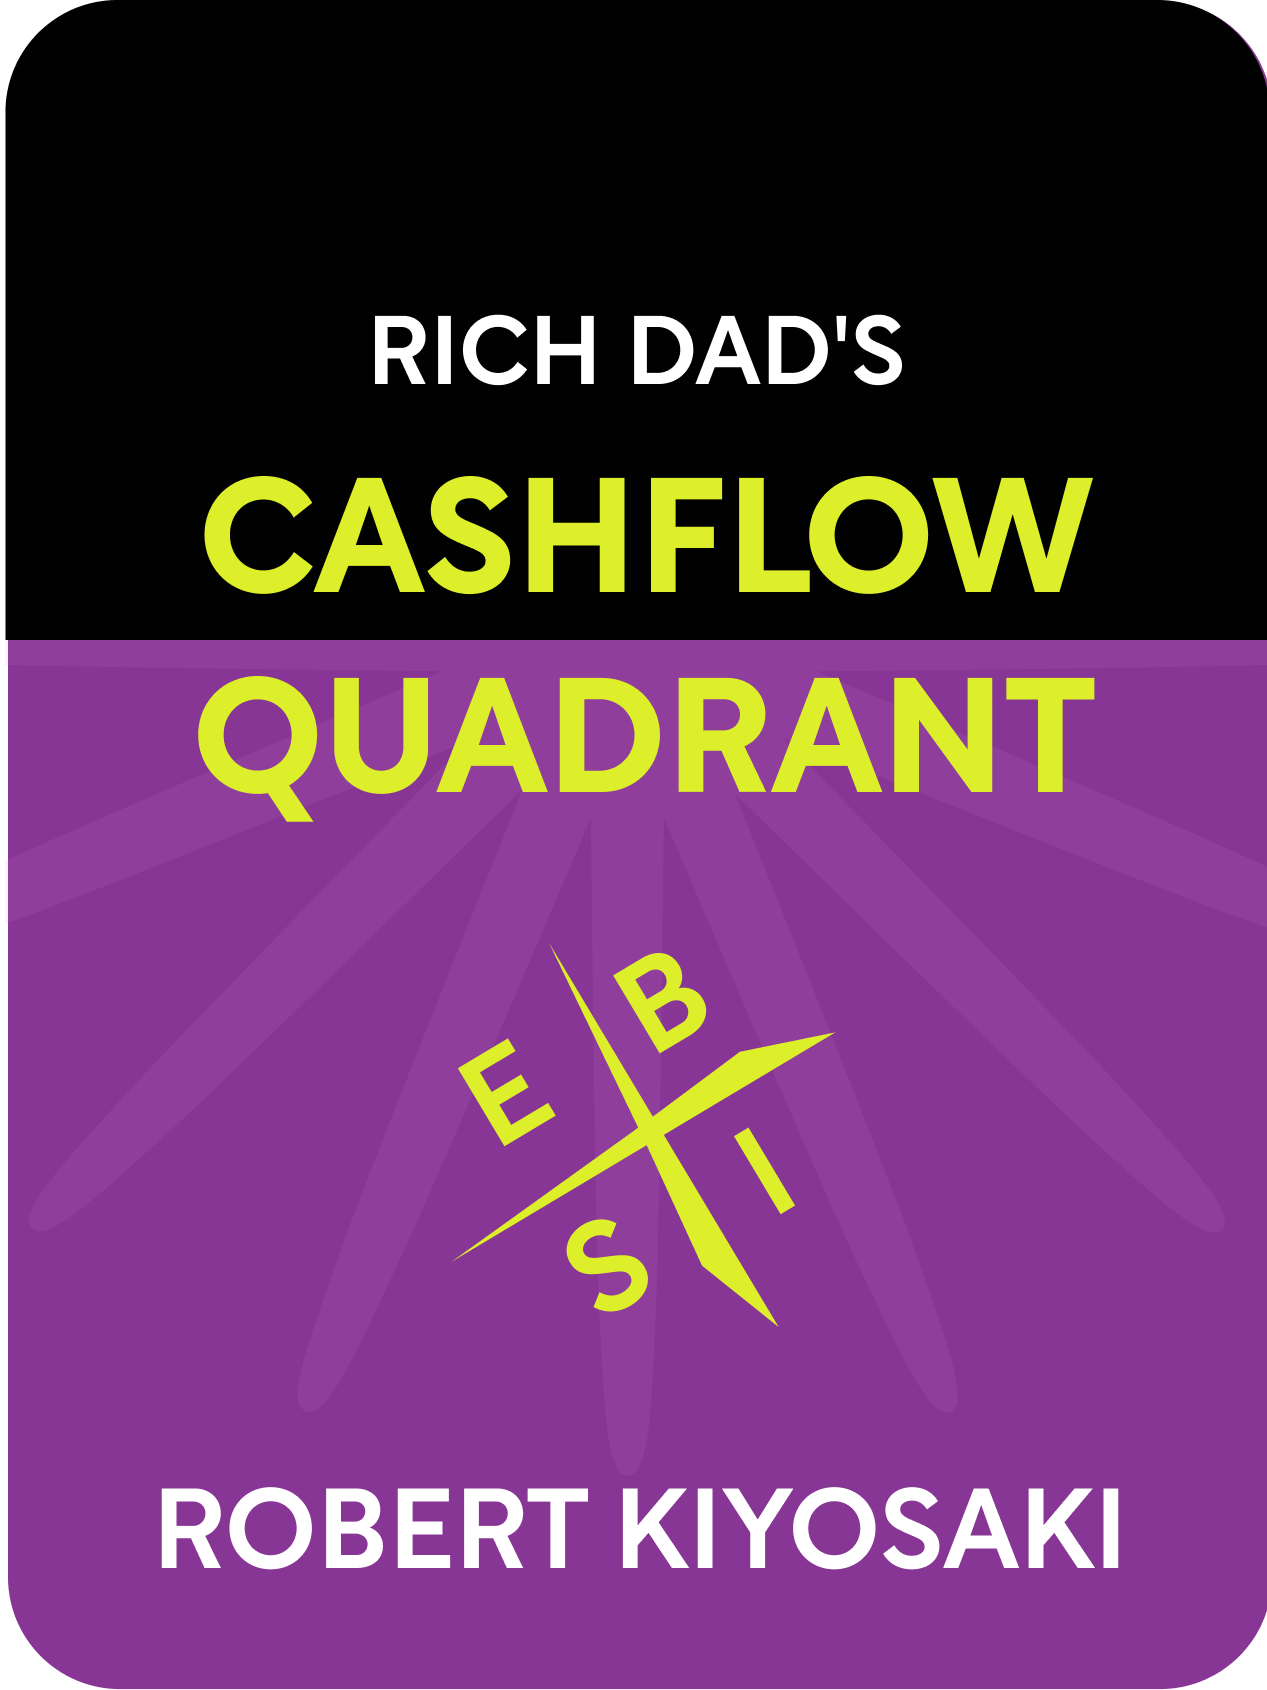 Rich Dad's Cashflow Quadrant by Robert Kiyosaki: Book Summary